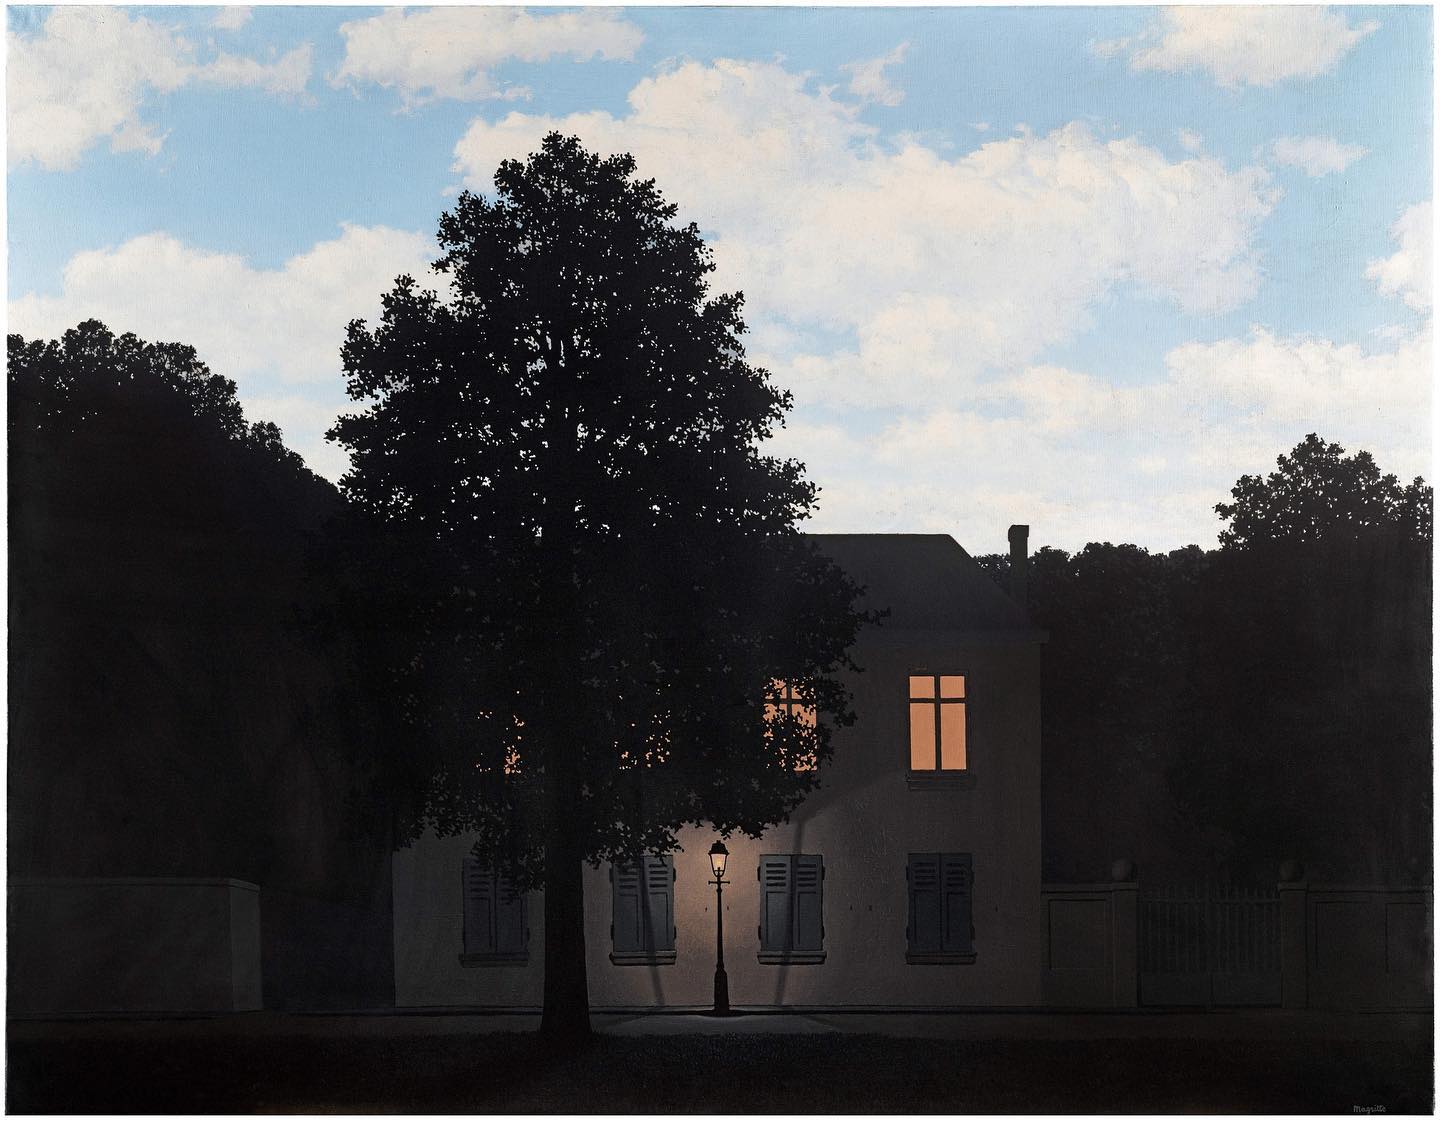 All Eyes On Magritte Landscape at Sotheby's - Ocula Advisory